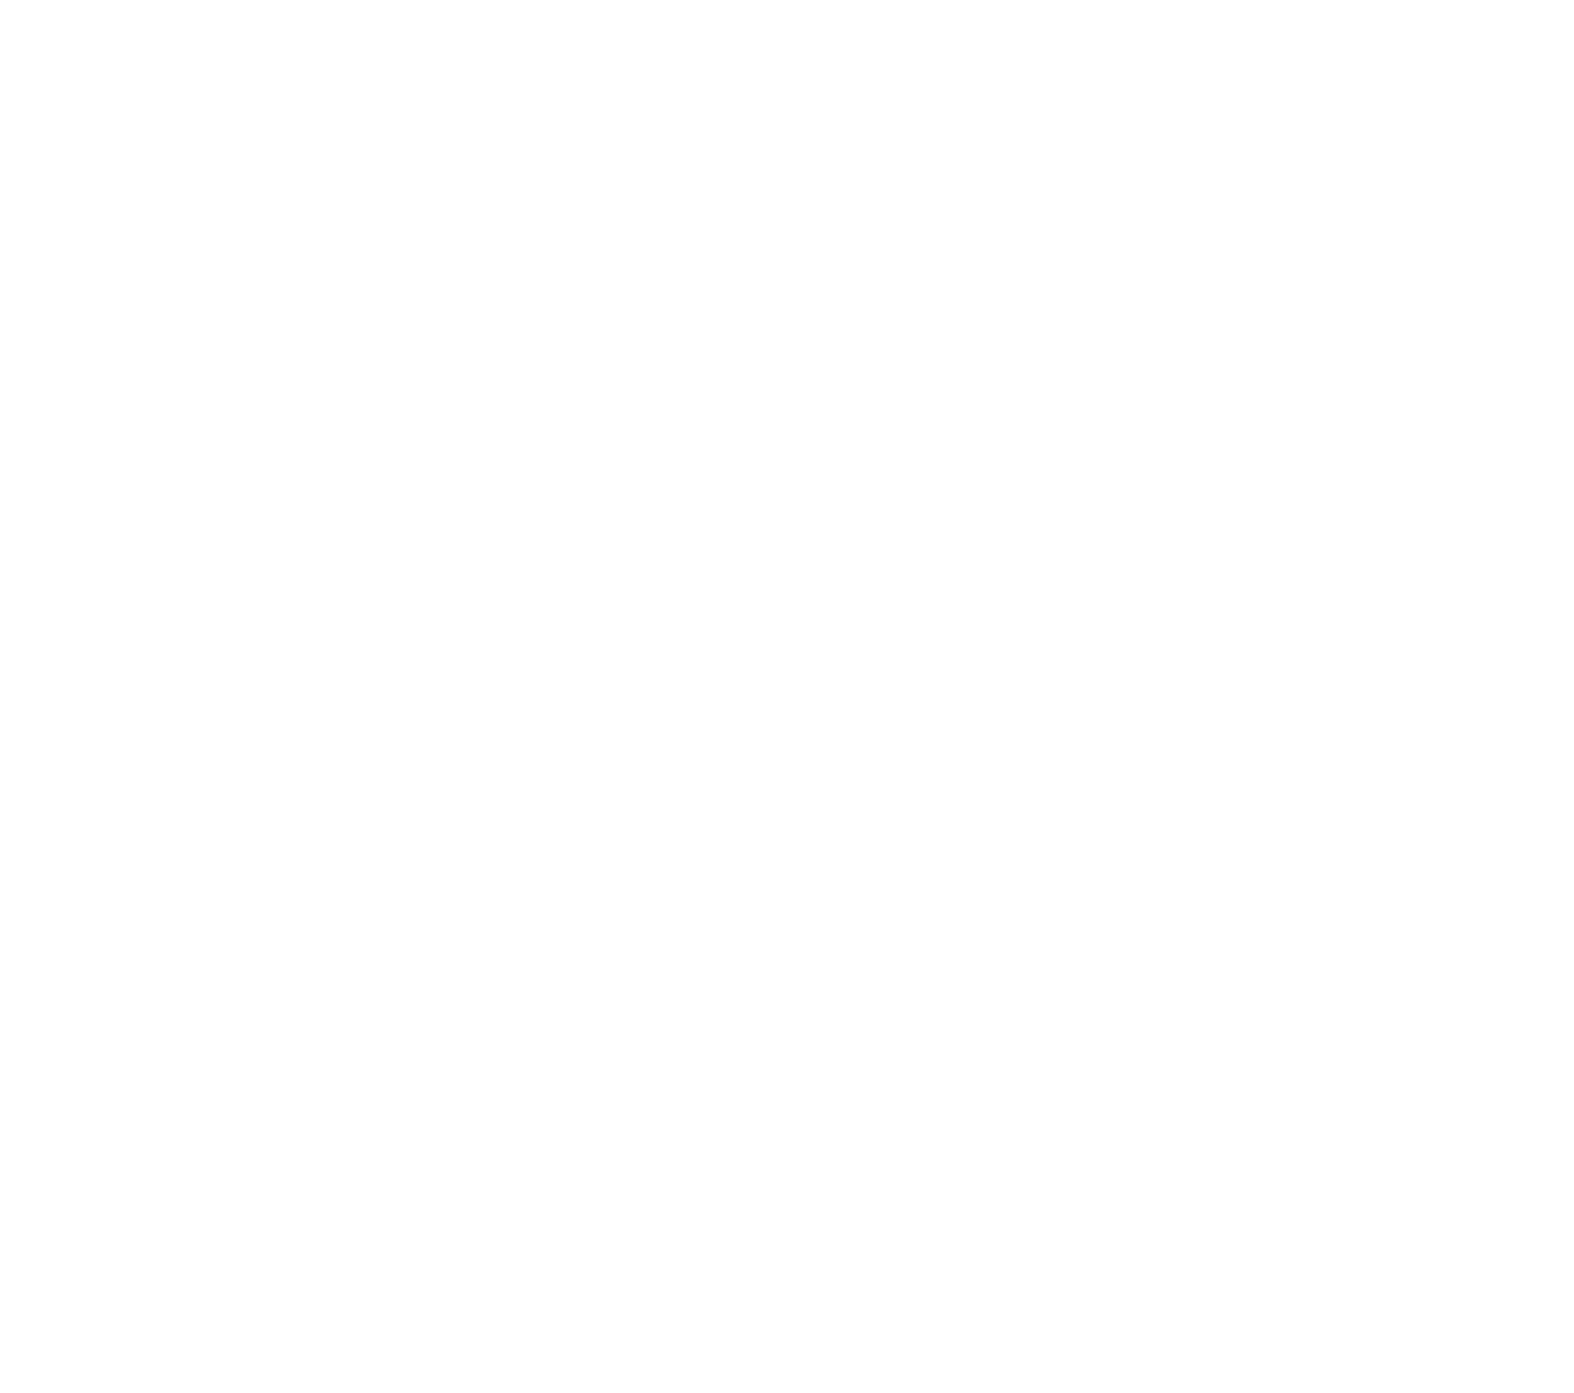 Merus logo for dark backgrounds (transparent PNG)